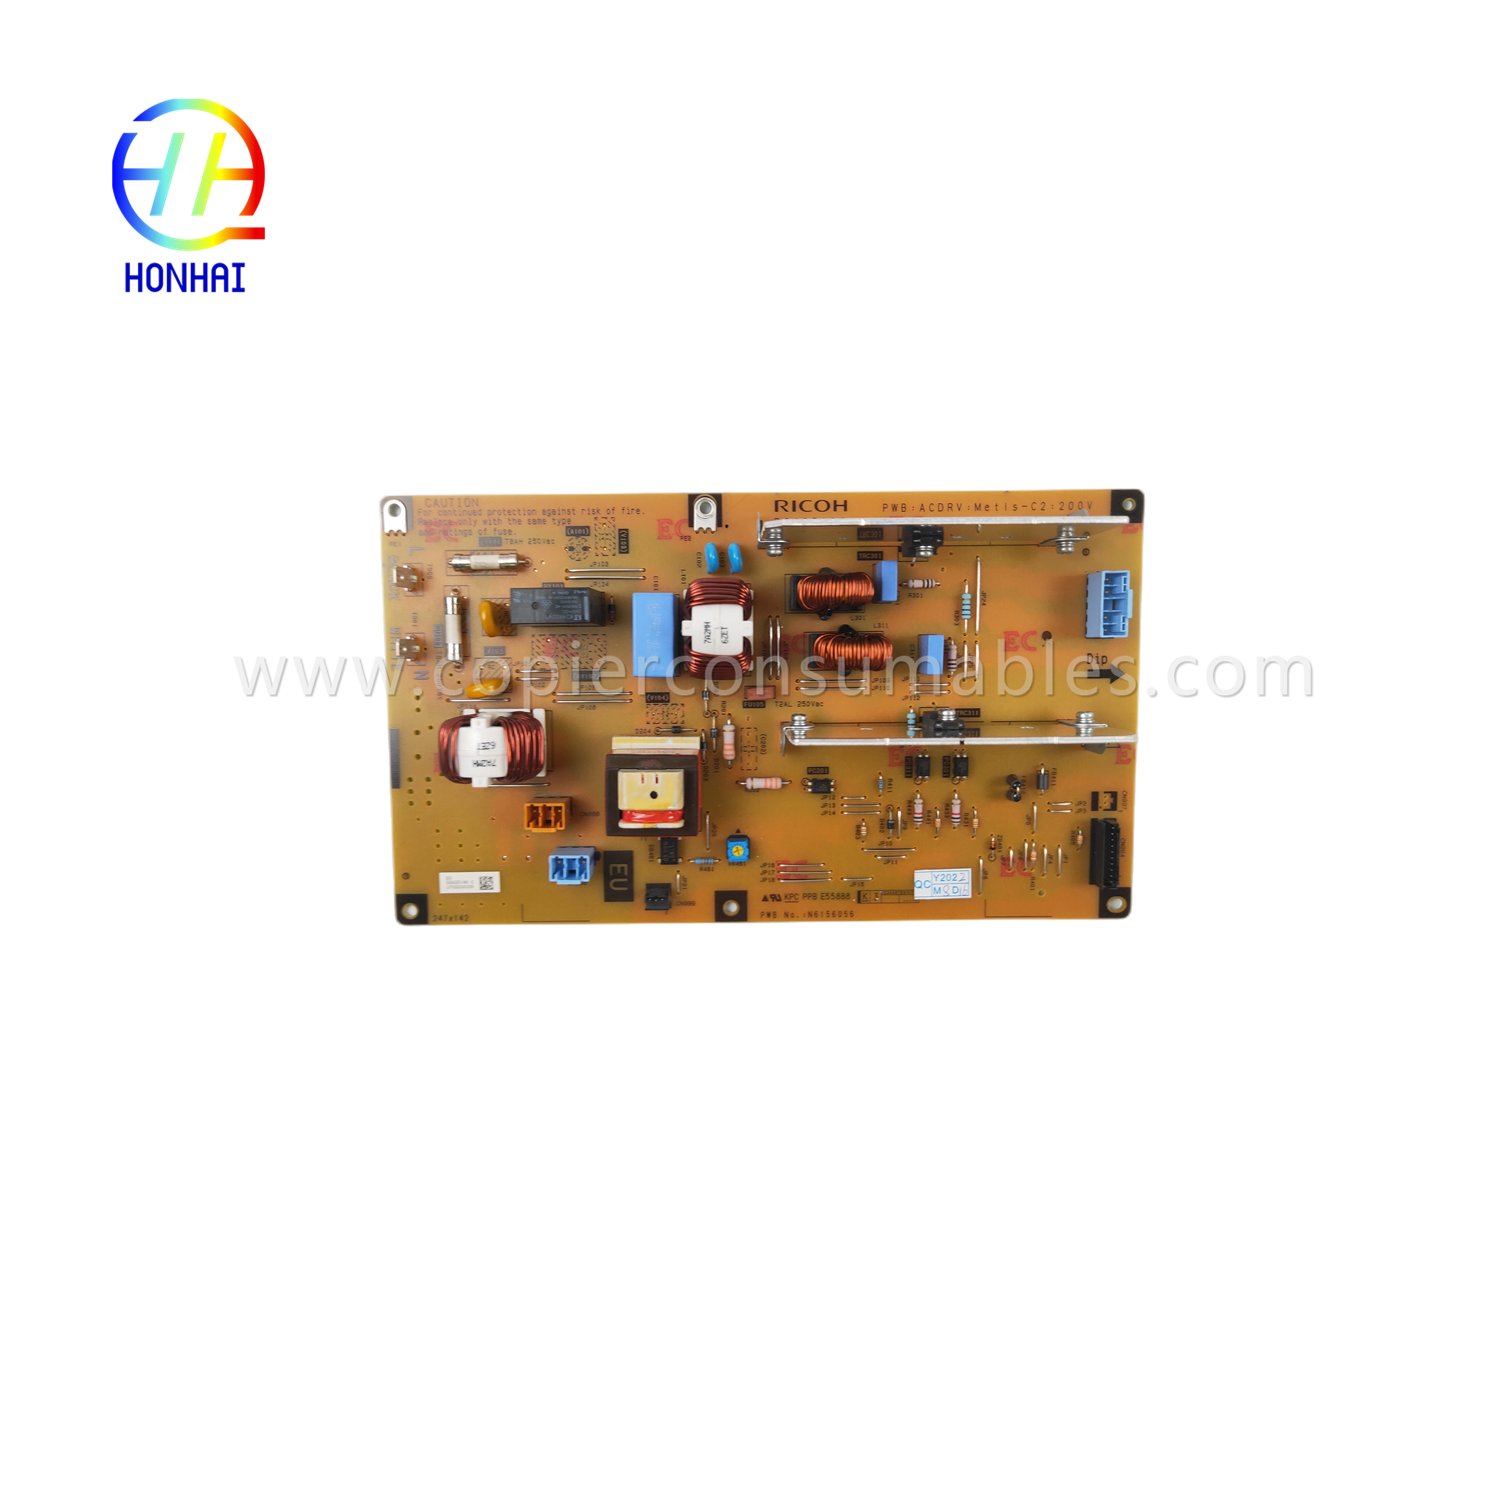 Ricoh Aficio mpc4504 mpc5504 mpc6004 D242-5186 OEM नियंत्रण बोर्ड के लिए एसी नियंत्रक बोर्ड